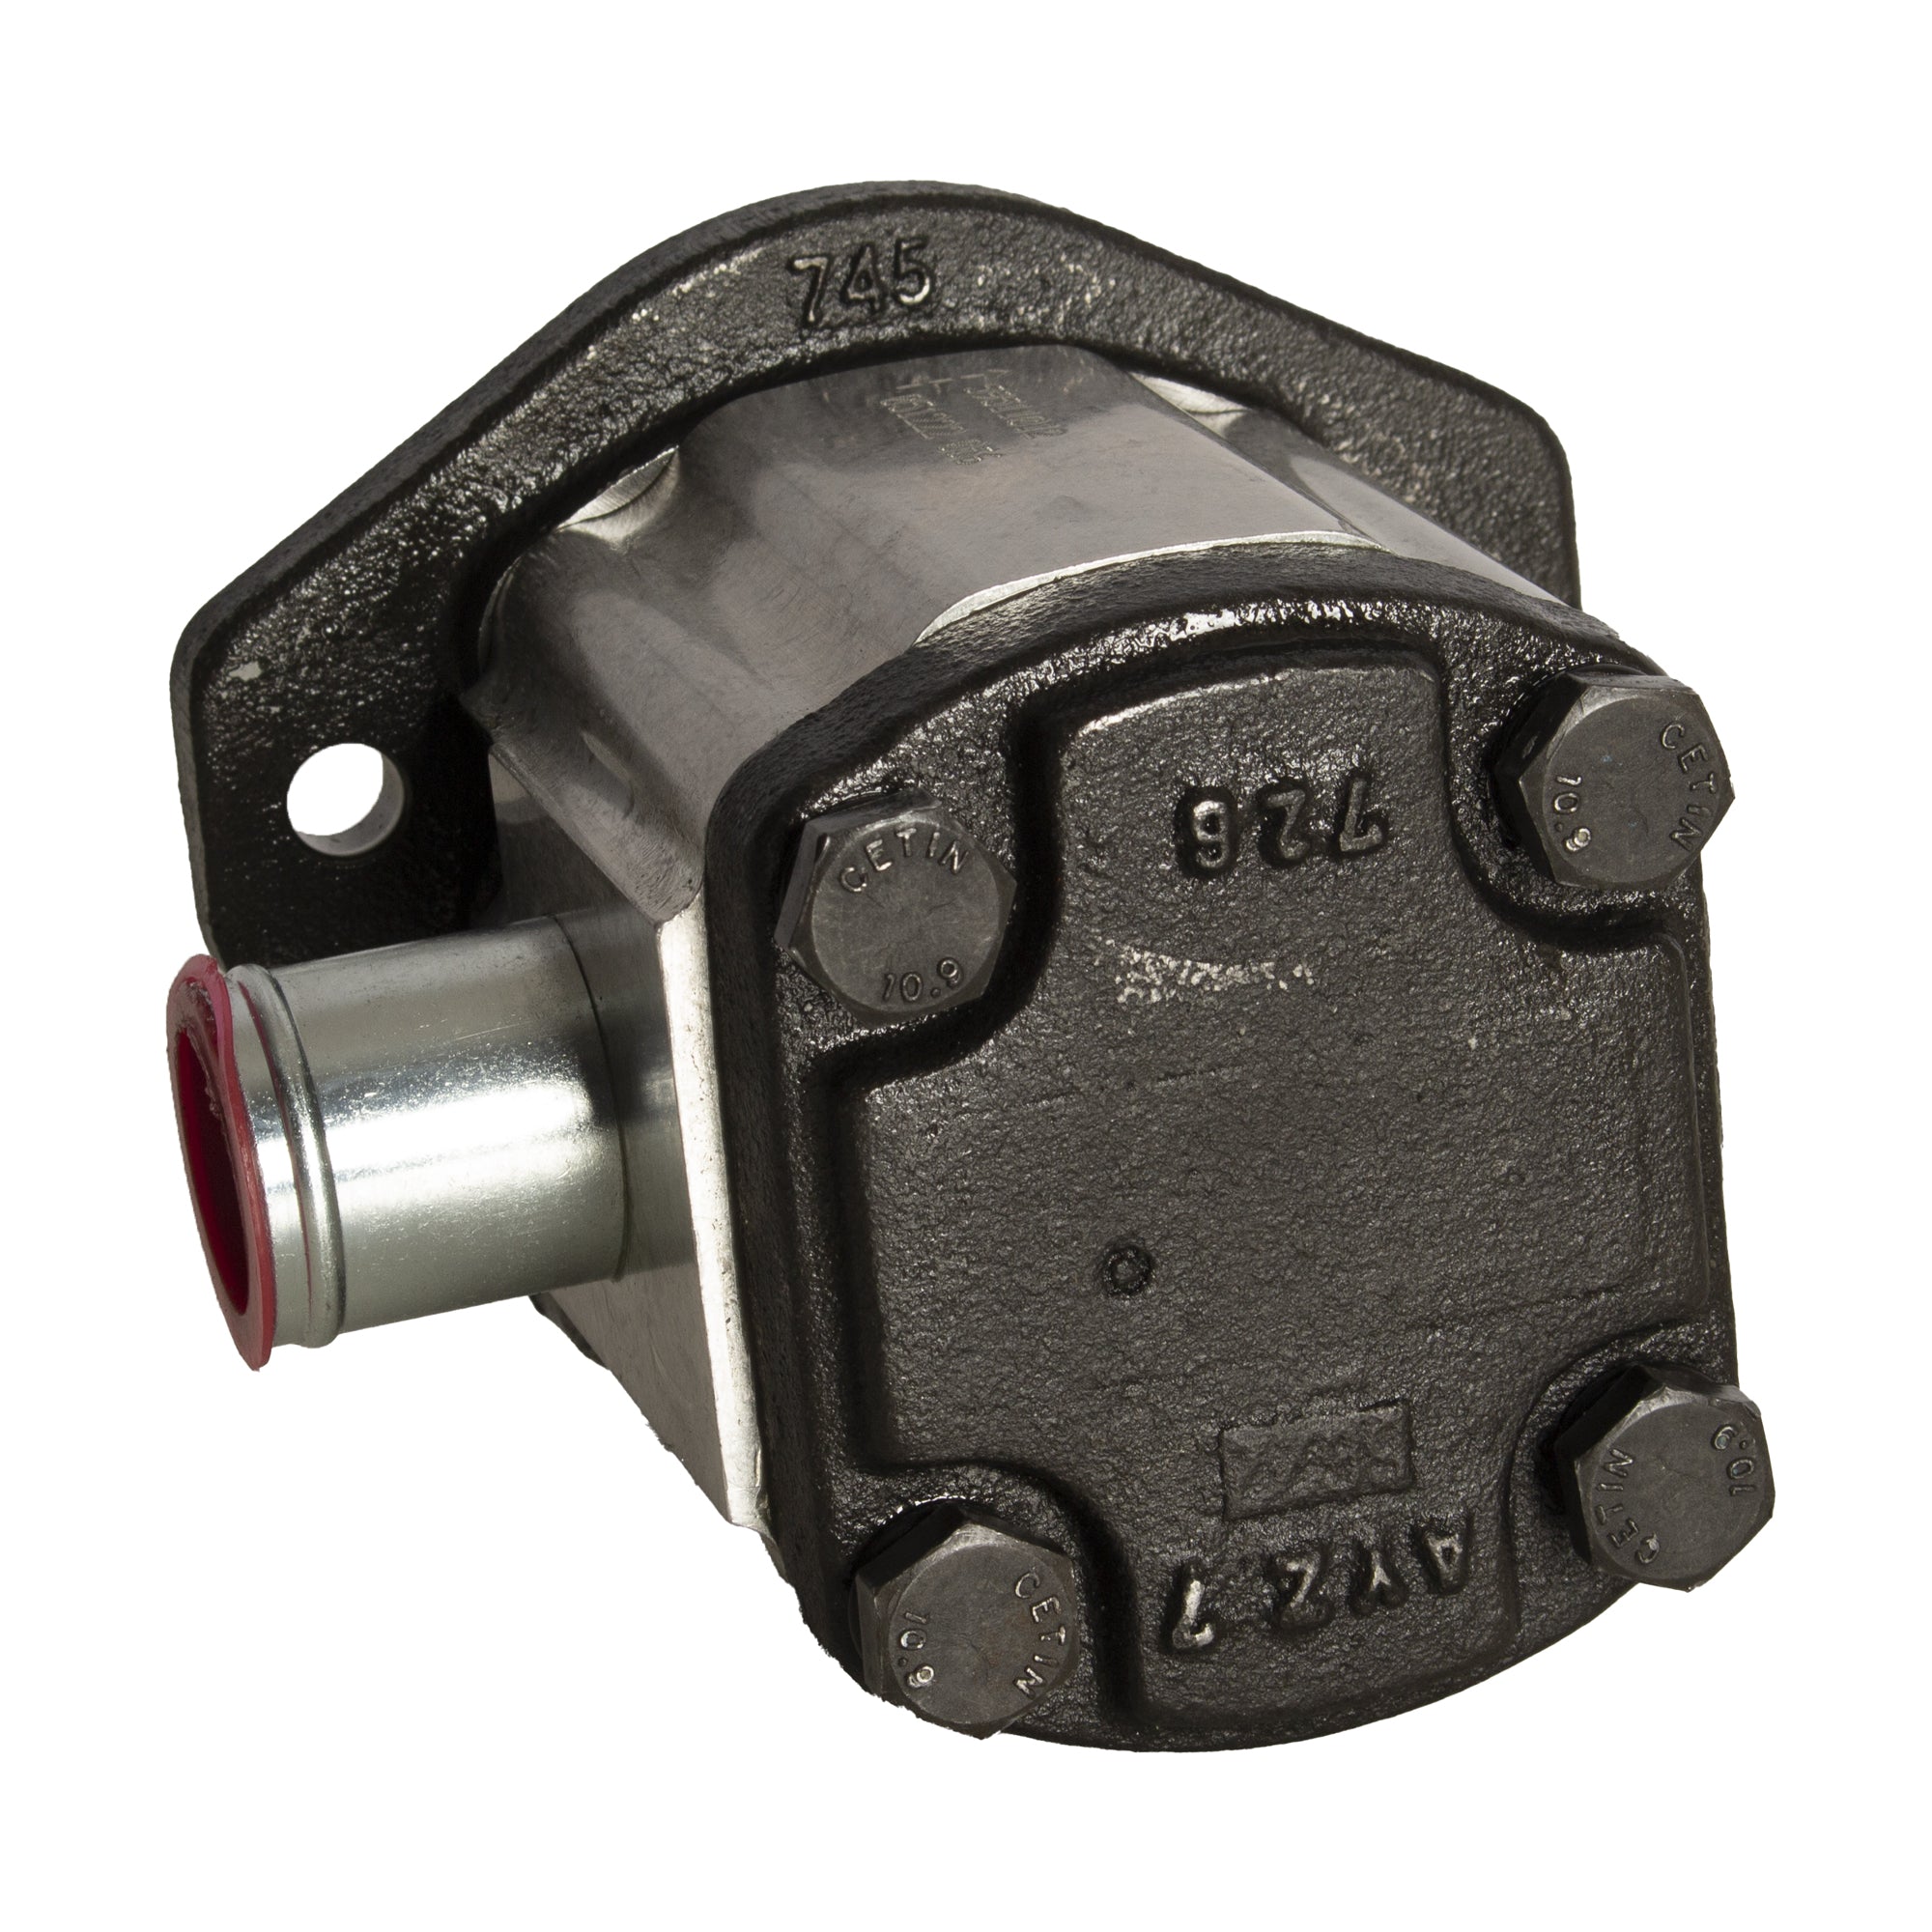 Hydraulic Pump Replacement for JOHN DEERE Backhoe Loader 110 110TLB LVA15347